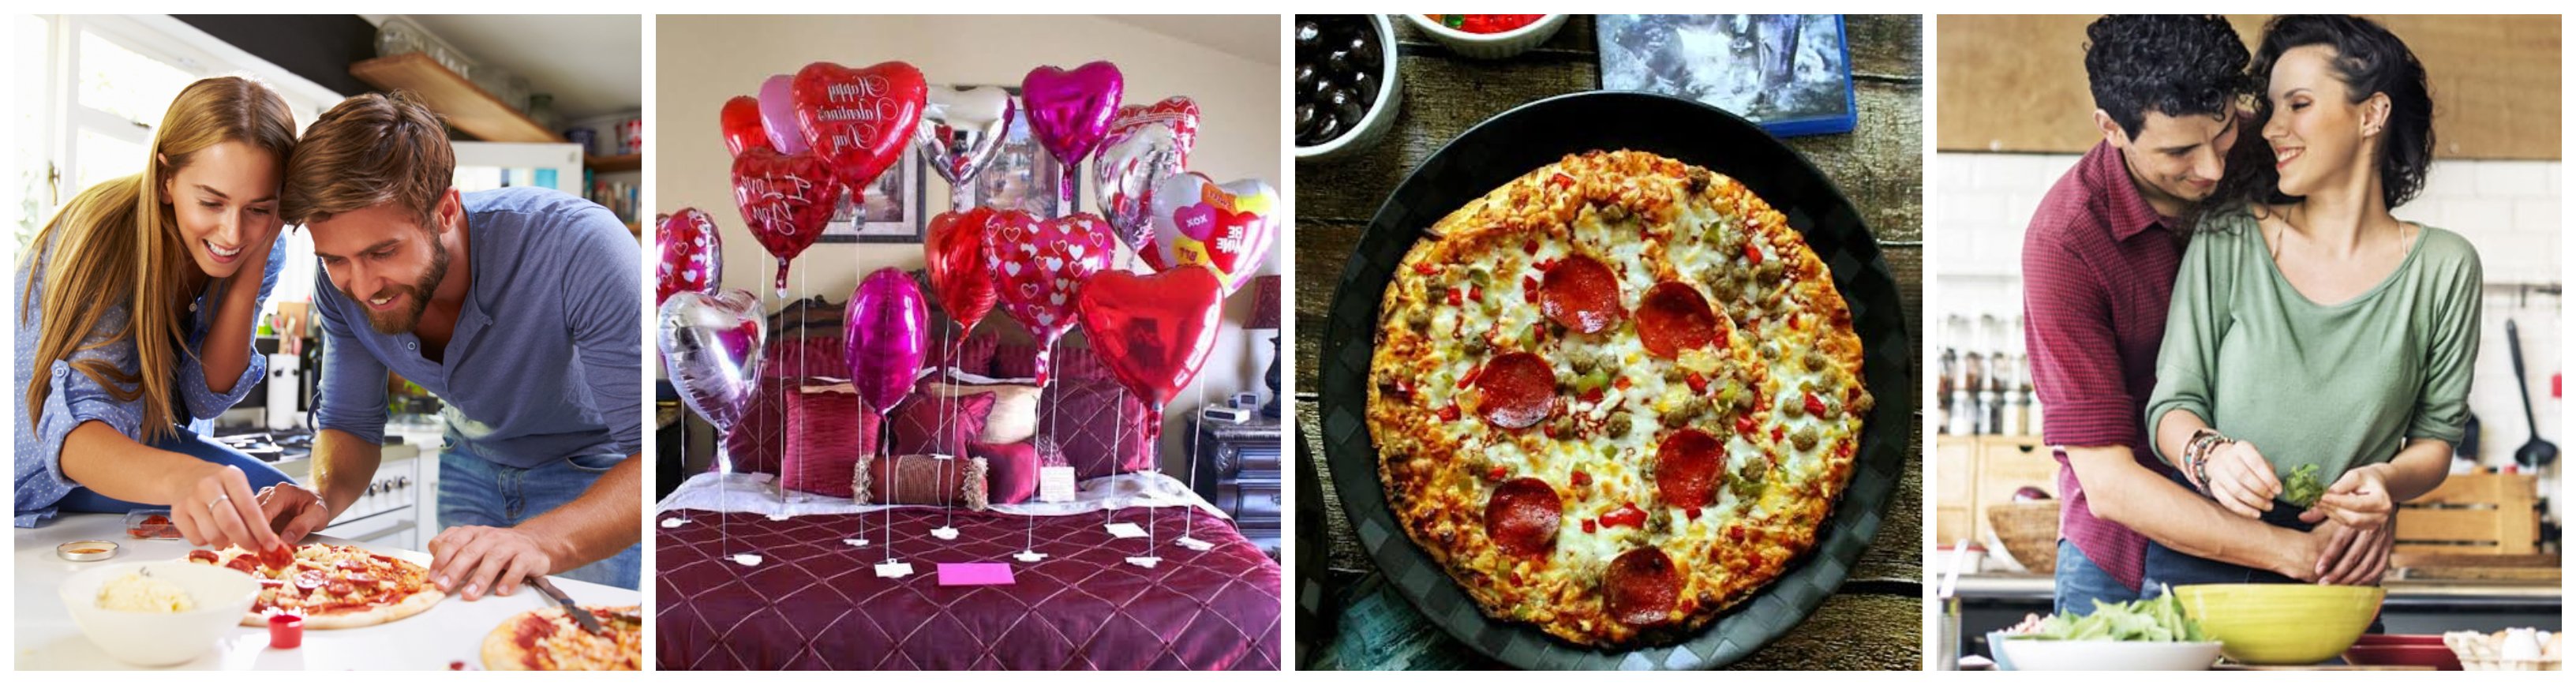 12 Best Last-Minute Valentine’s Day Date Ideas 4